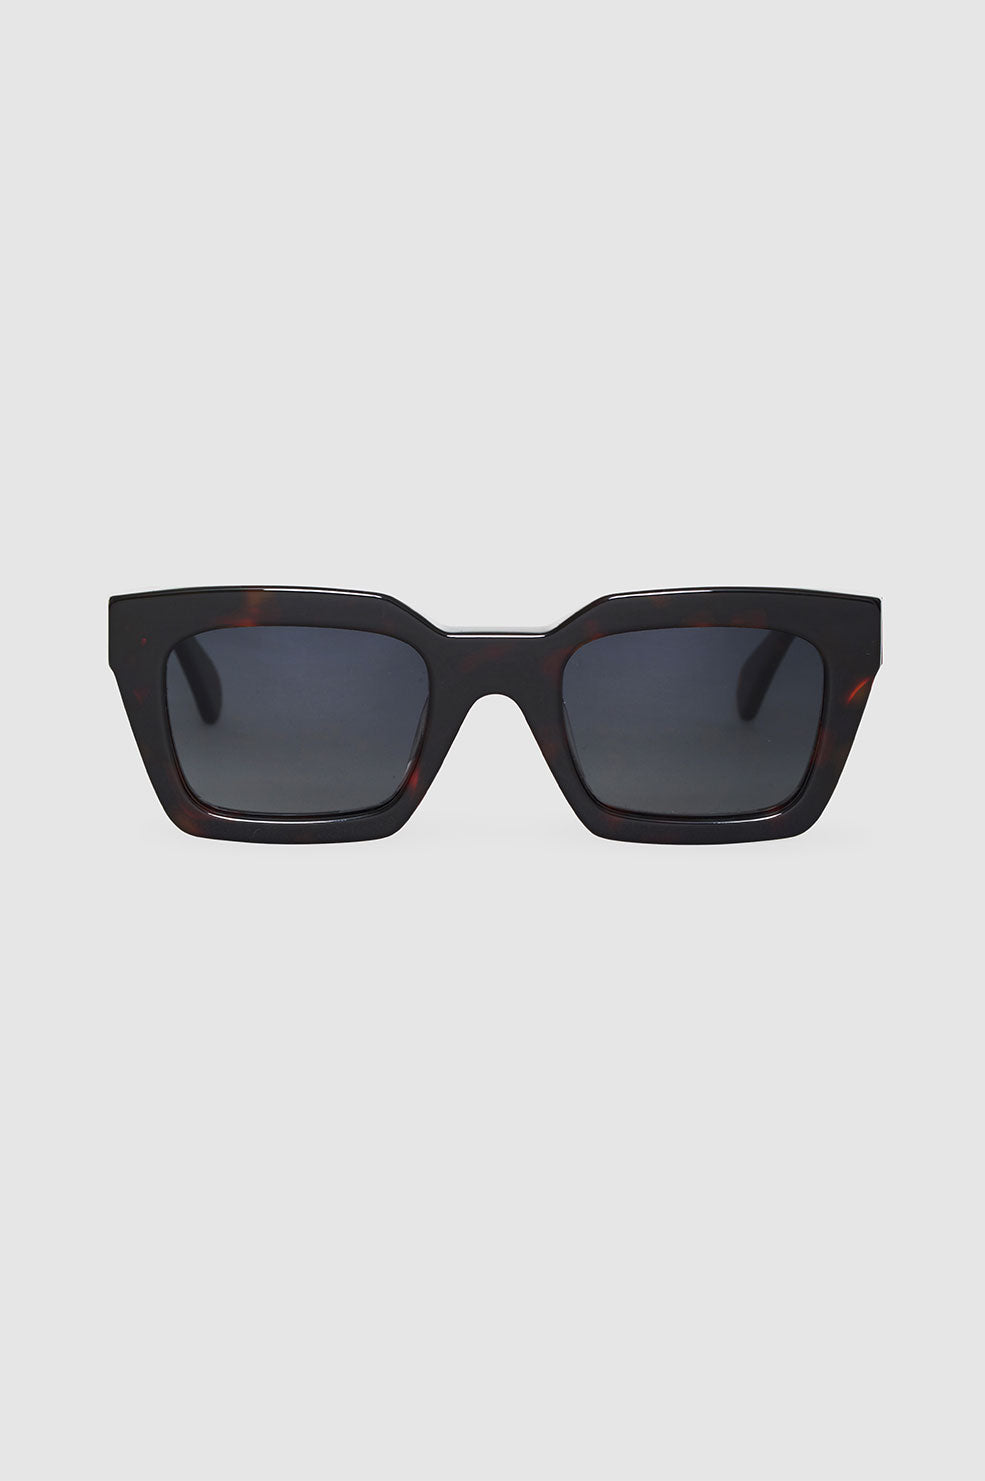 Indio Sunglasses  product image